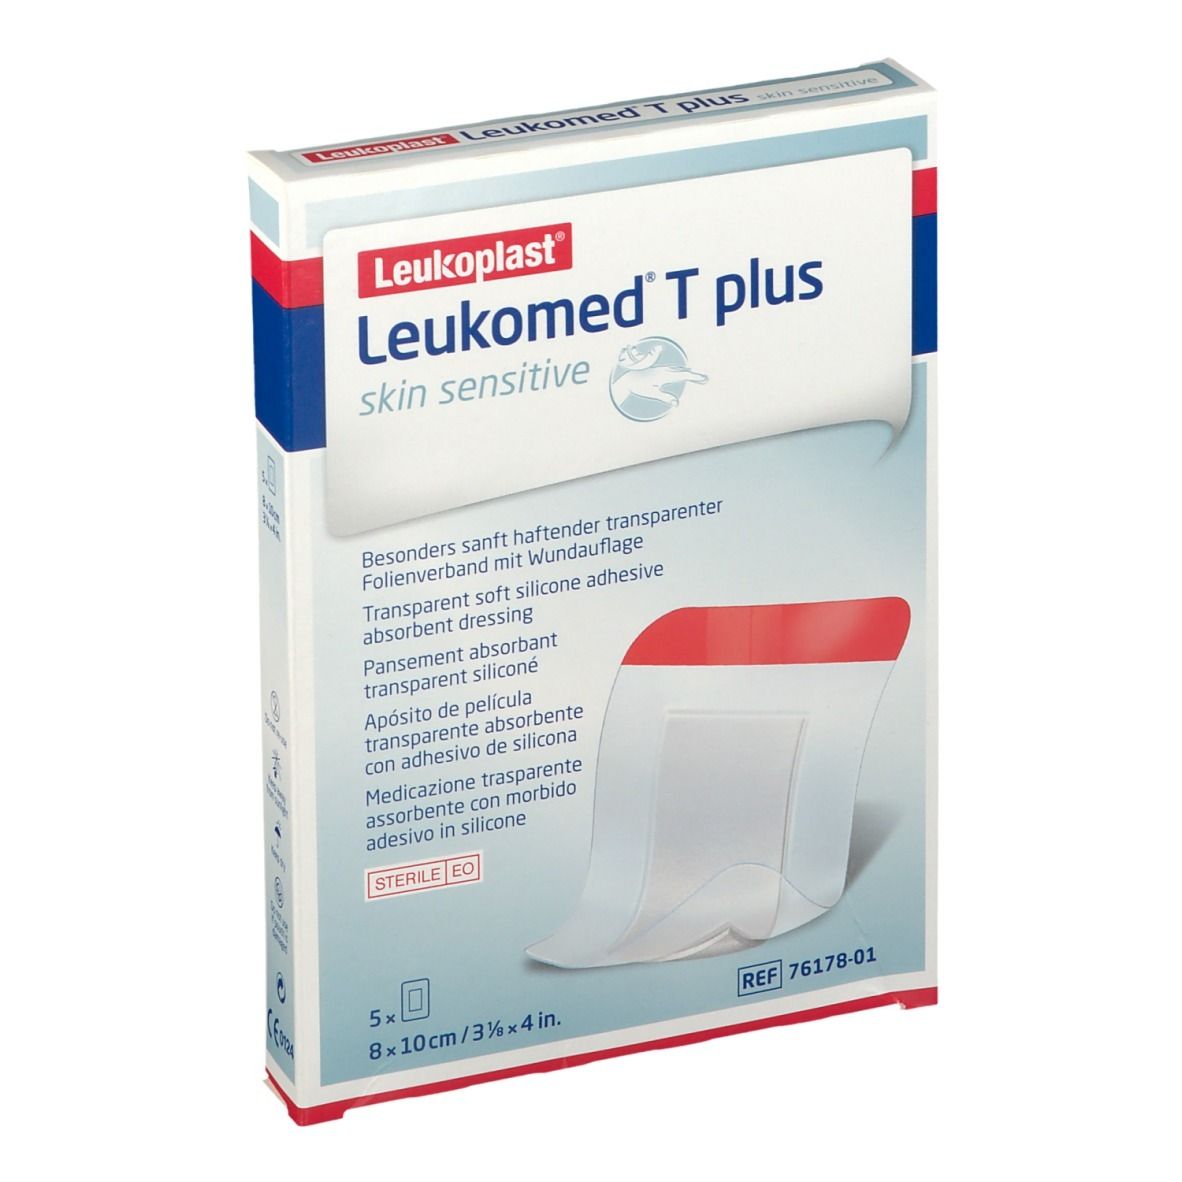 Leukoplast® Leukomed® T plus Skin Sensitive 8 x 10 cm